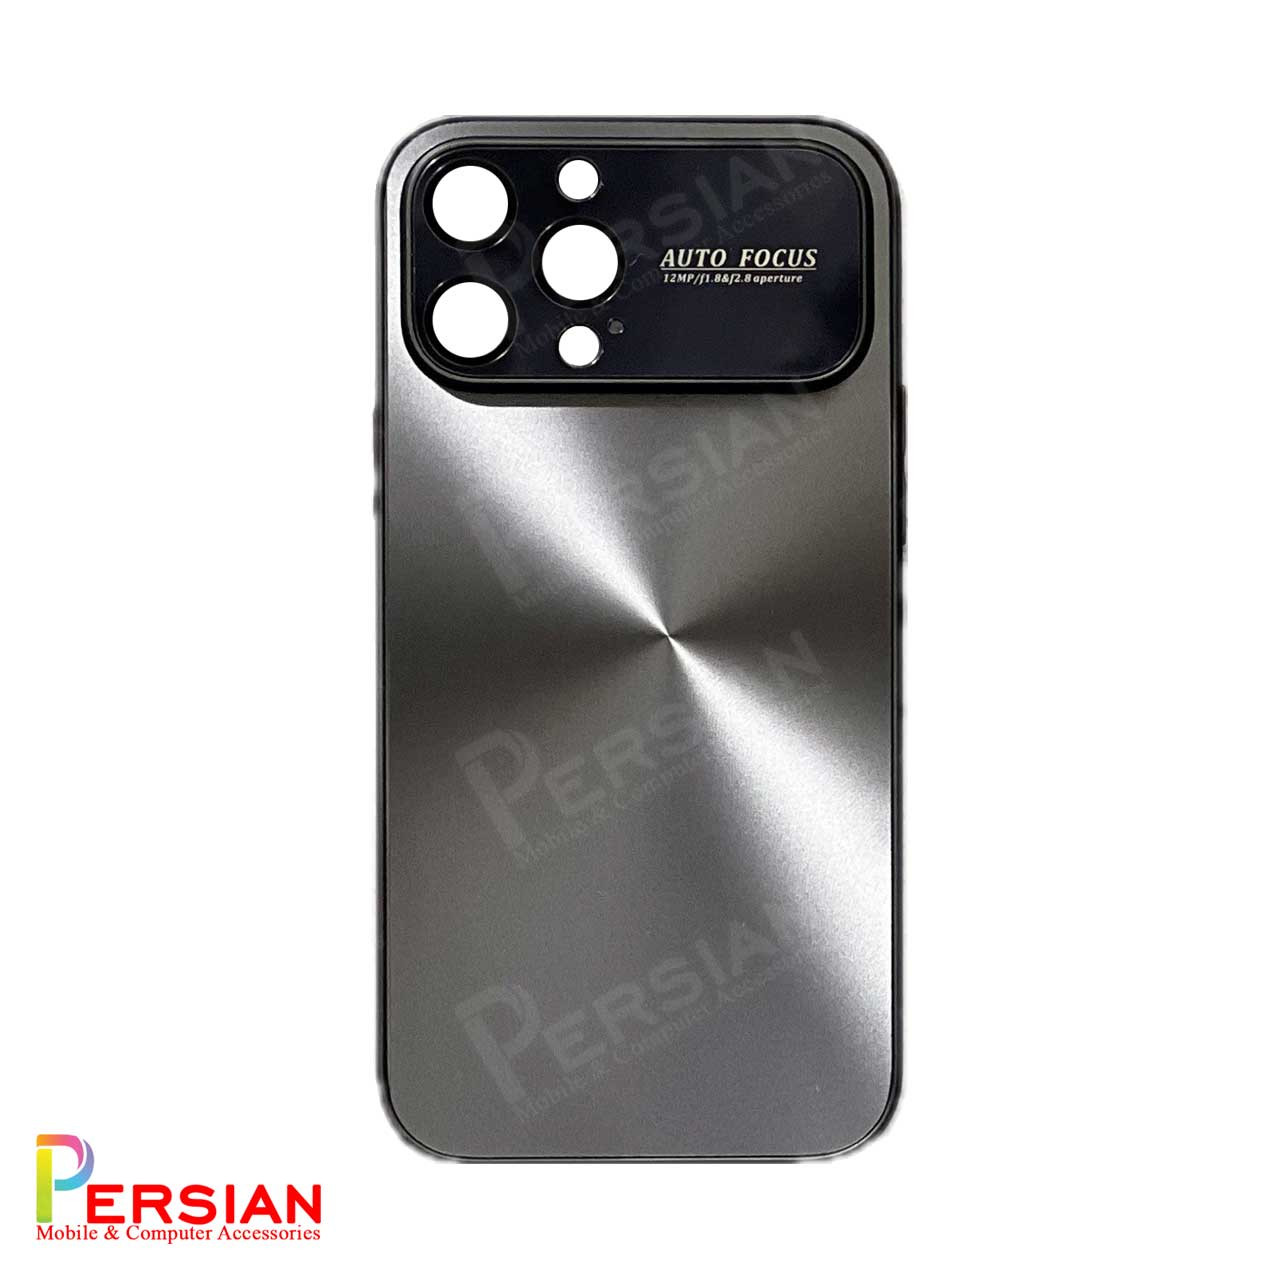 قاب گوشی آیفون 12 پرو مجیک ماسک طرح لیزری با محافظ لنز IPhone 12 Pro